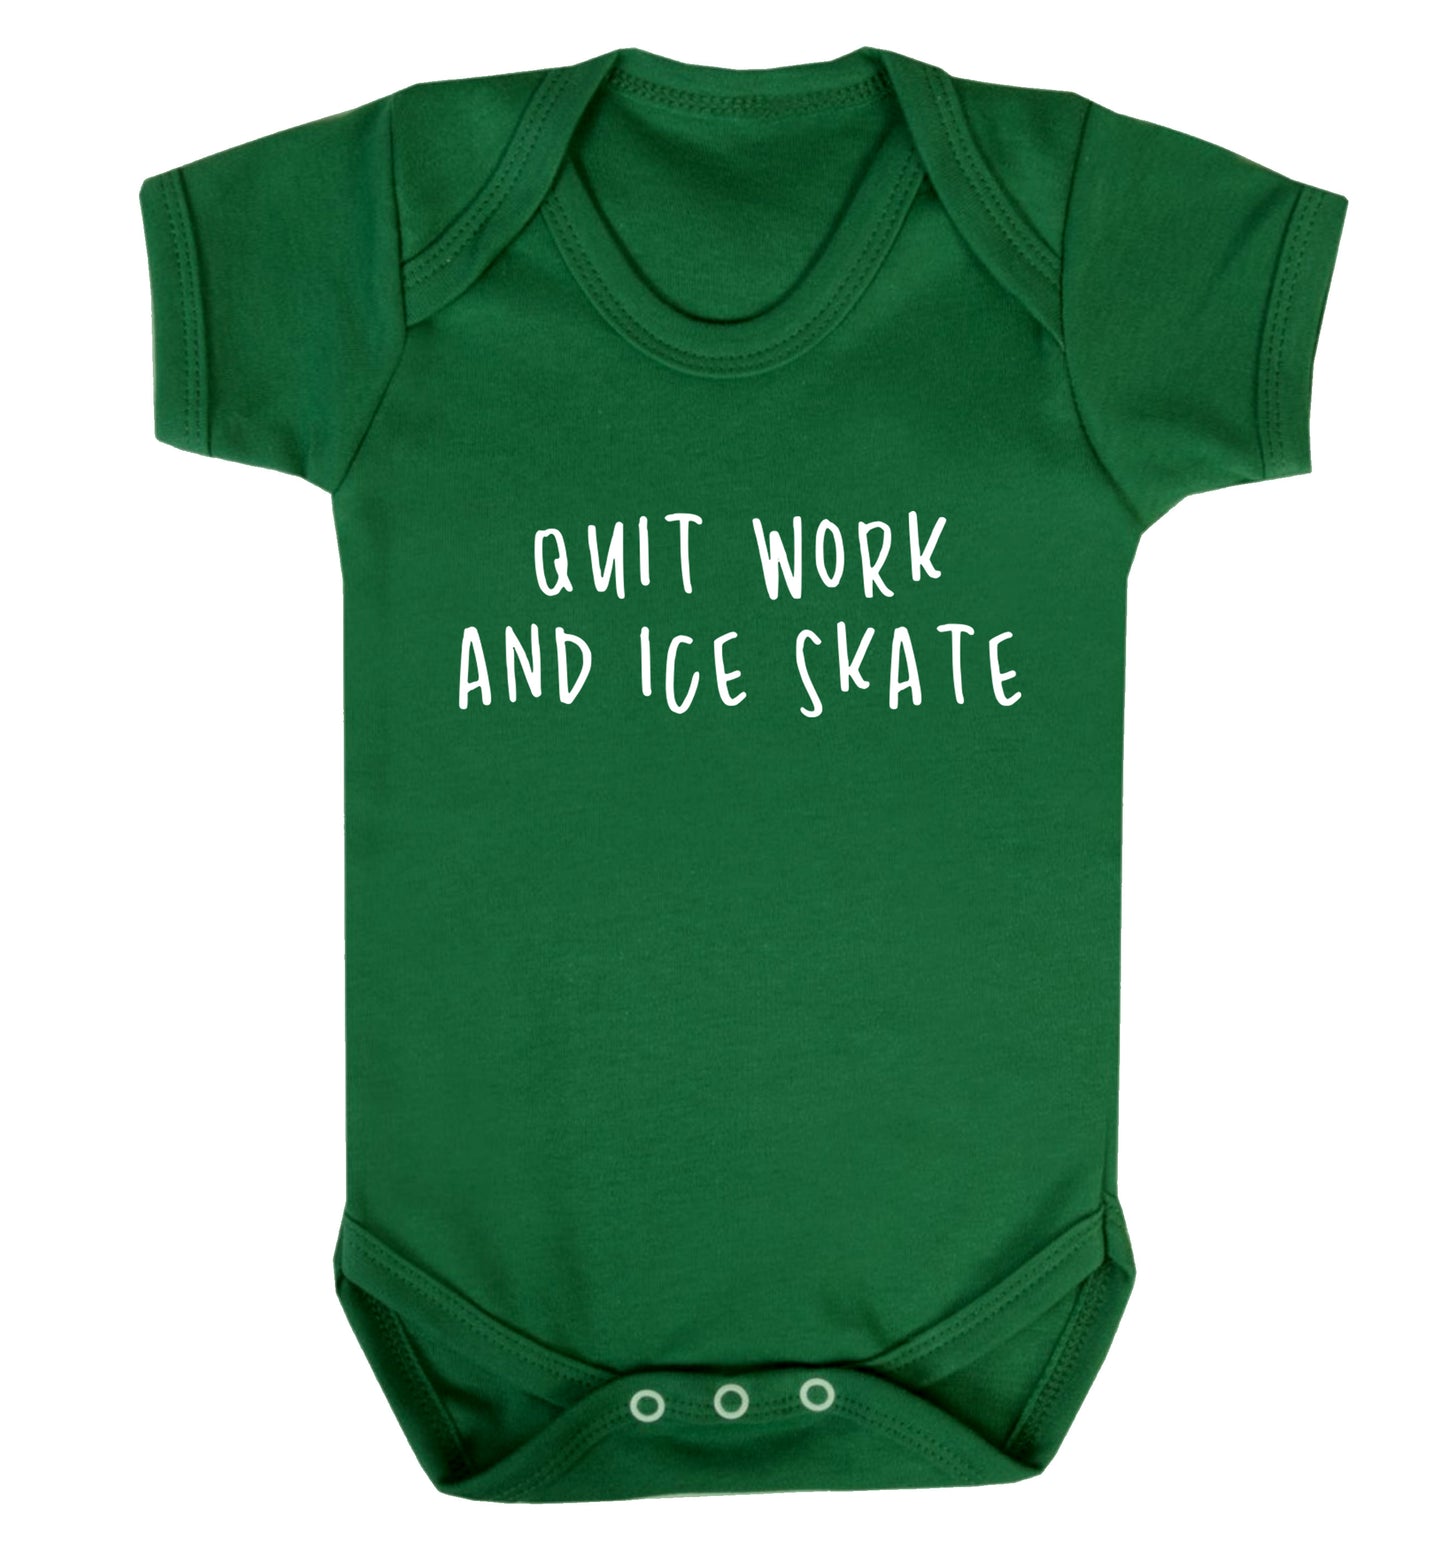 Quit work ice skate Baby Vest green 18-24 months